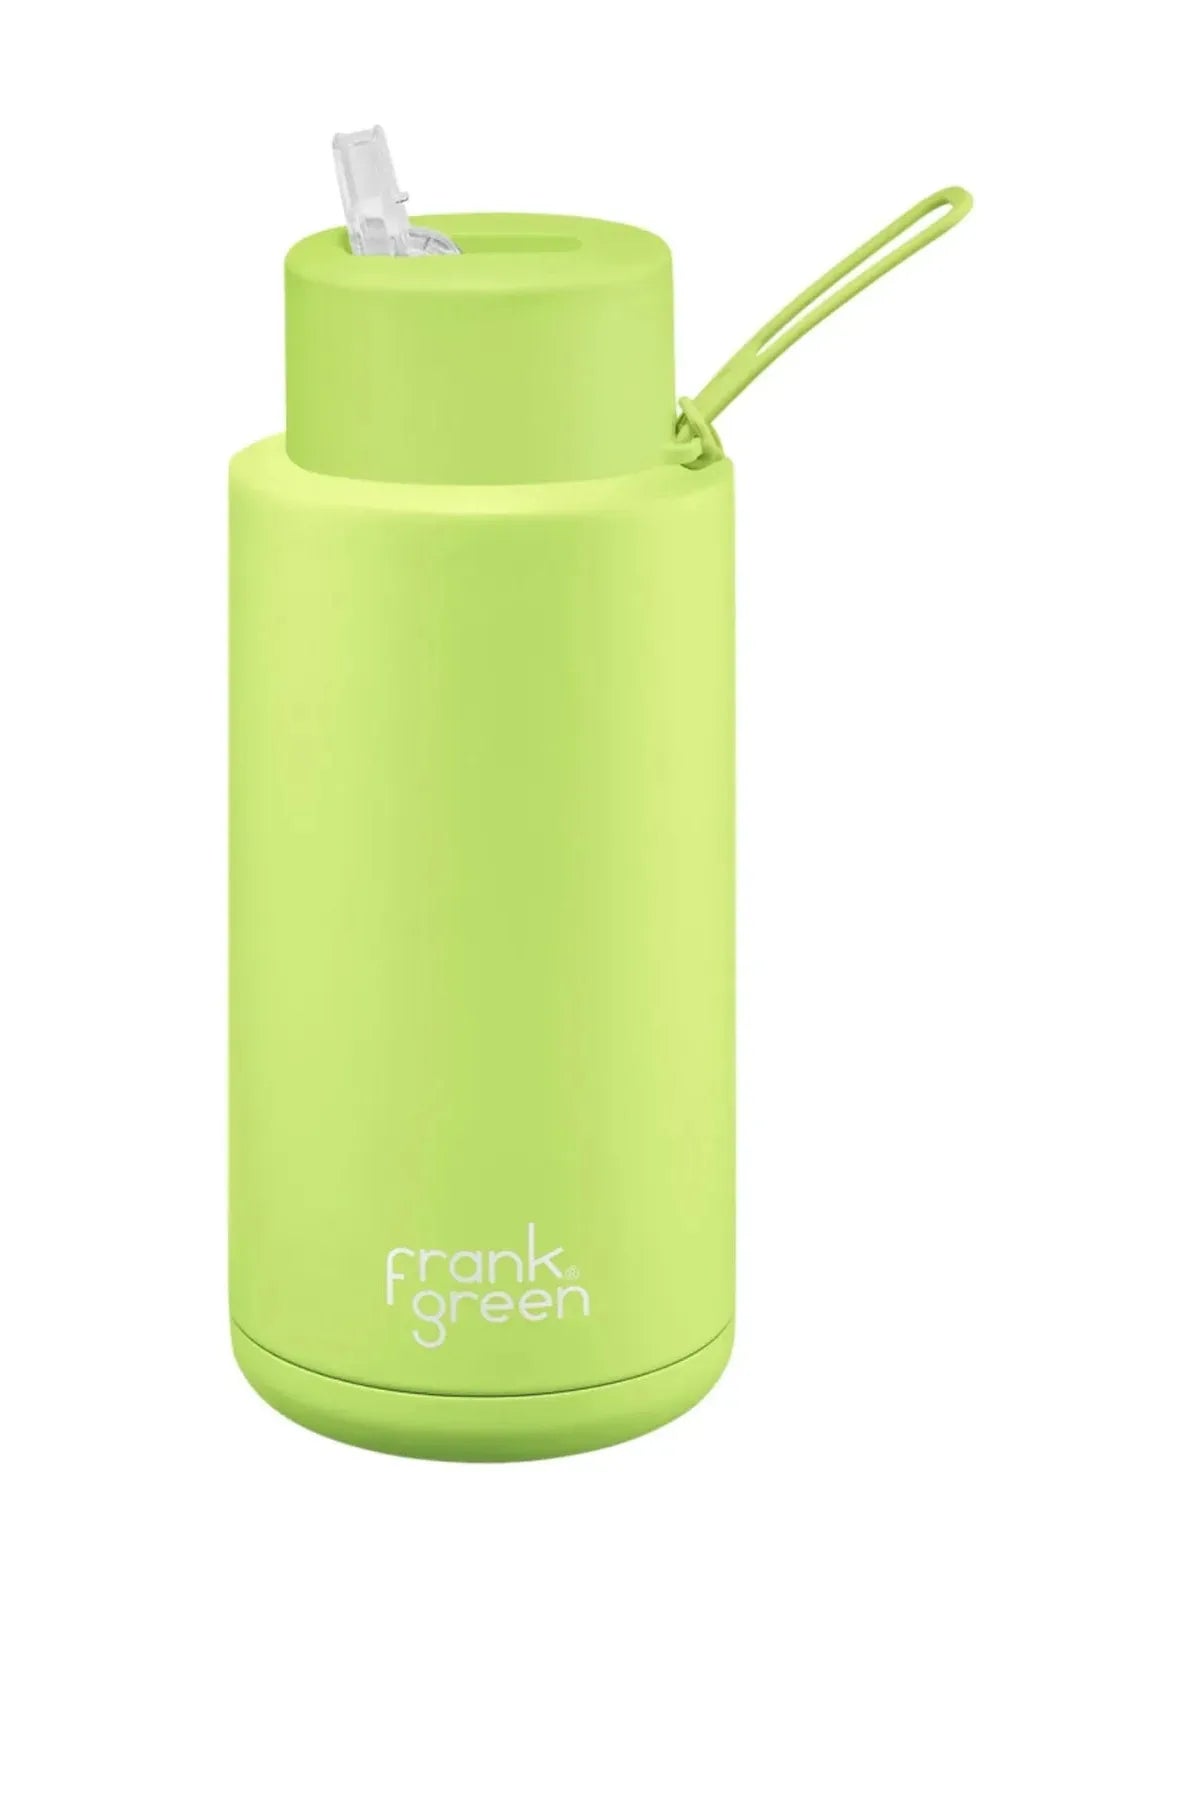 Frank green limited edition ceramic reusable bottle - 34oz / 1,000ml - pistachio green